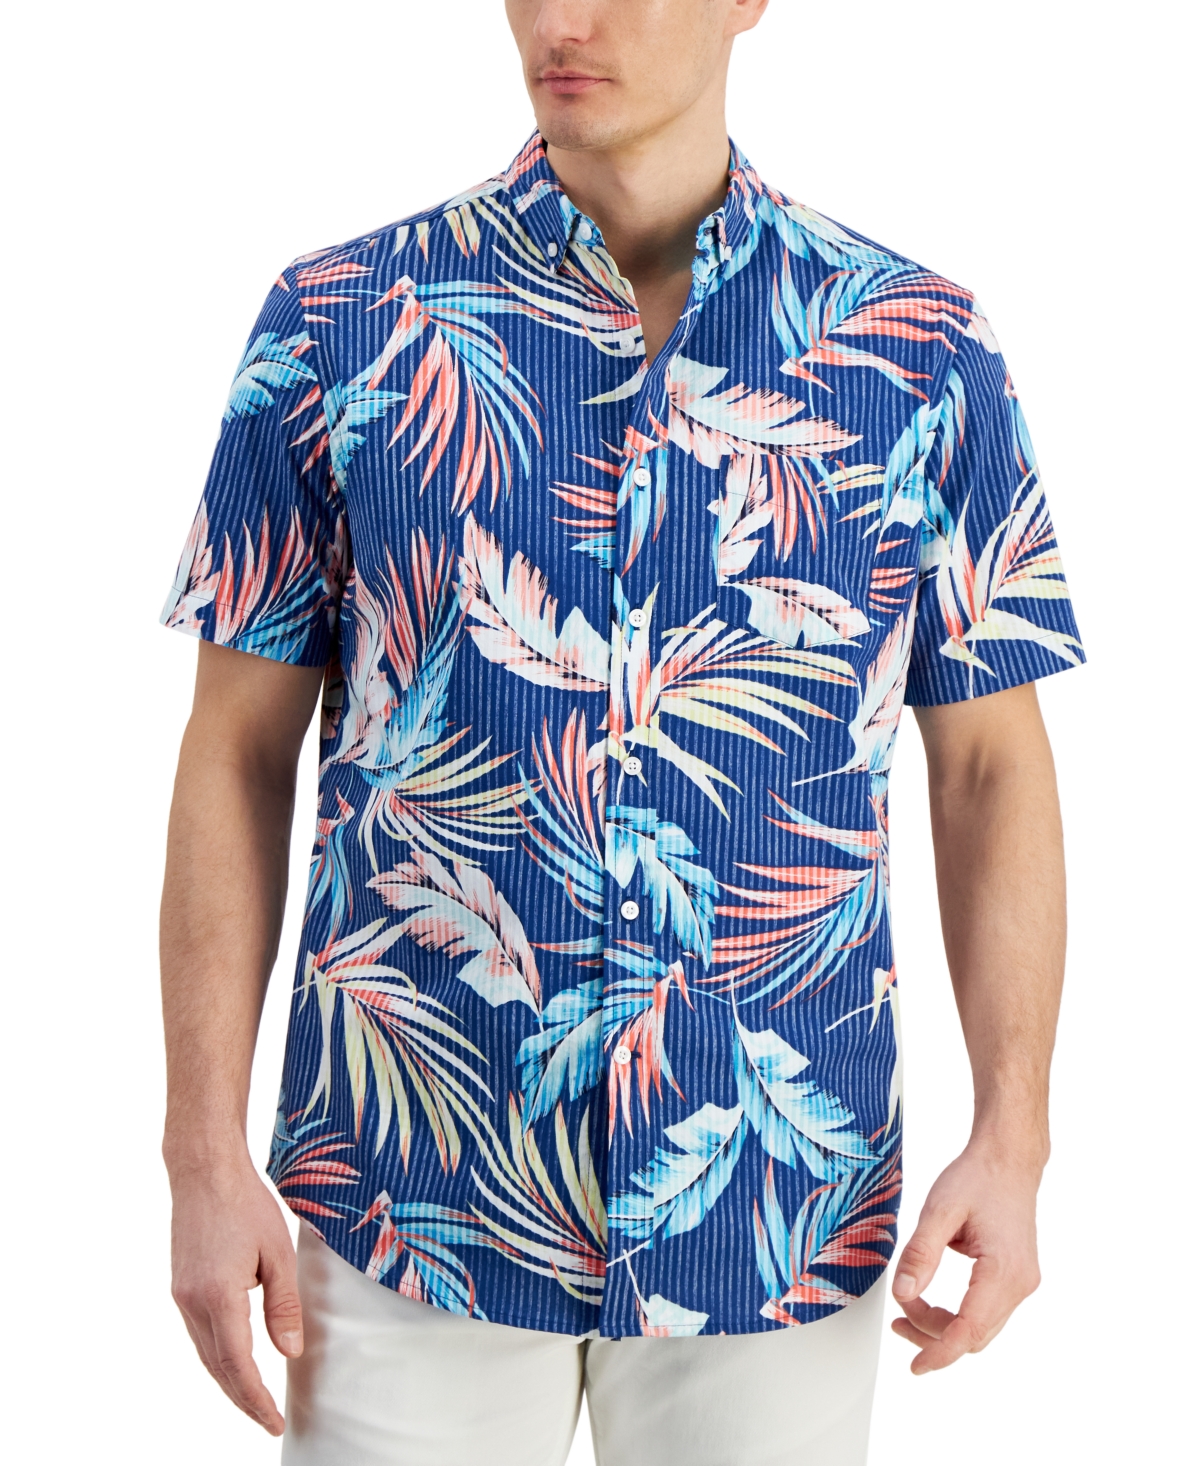 Men's Summer Tropical Leaf Patterned Short-Sleeve Seersucker Shirt, Created for Macy's - Navy Crush